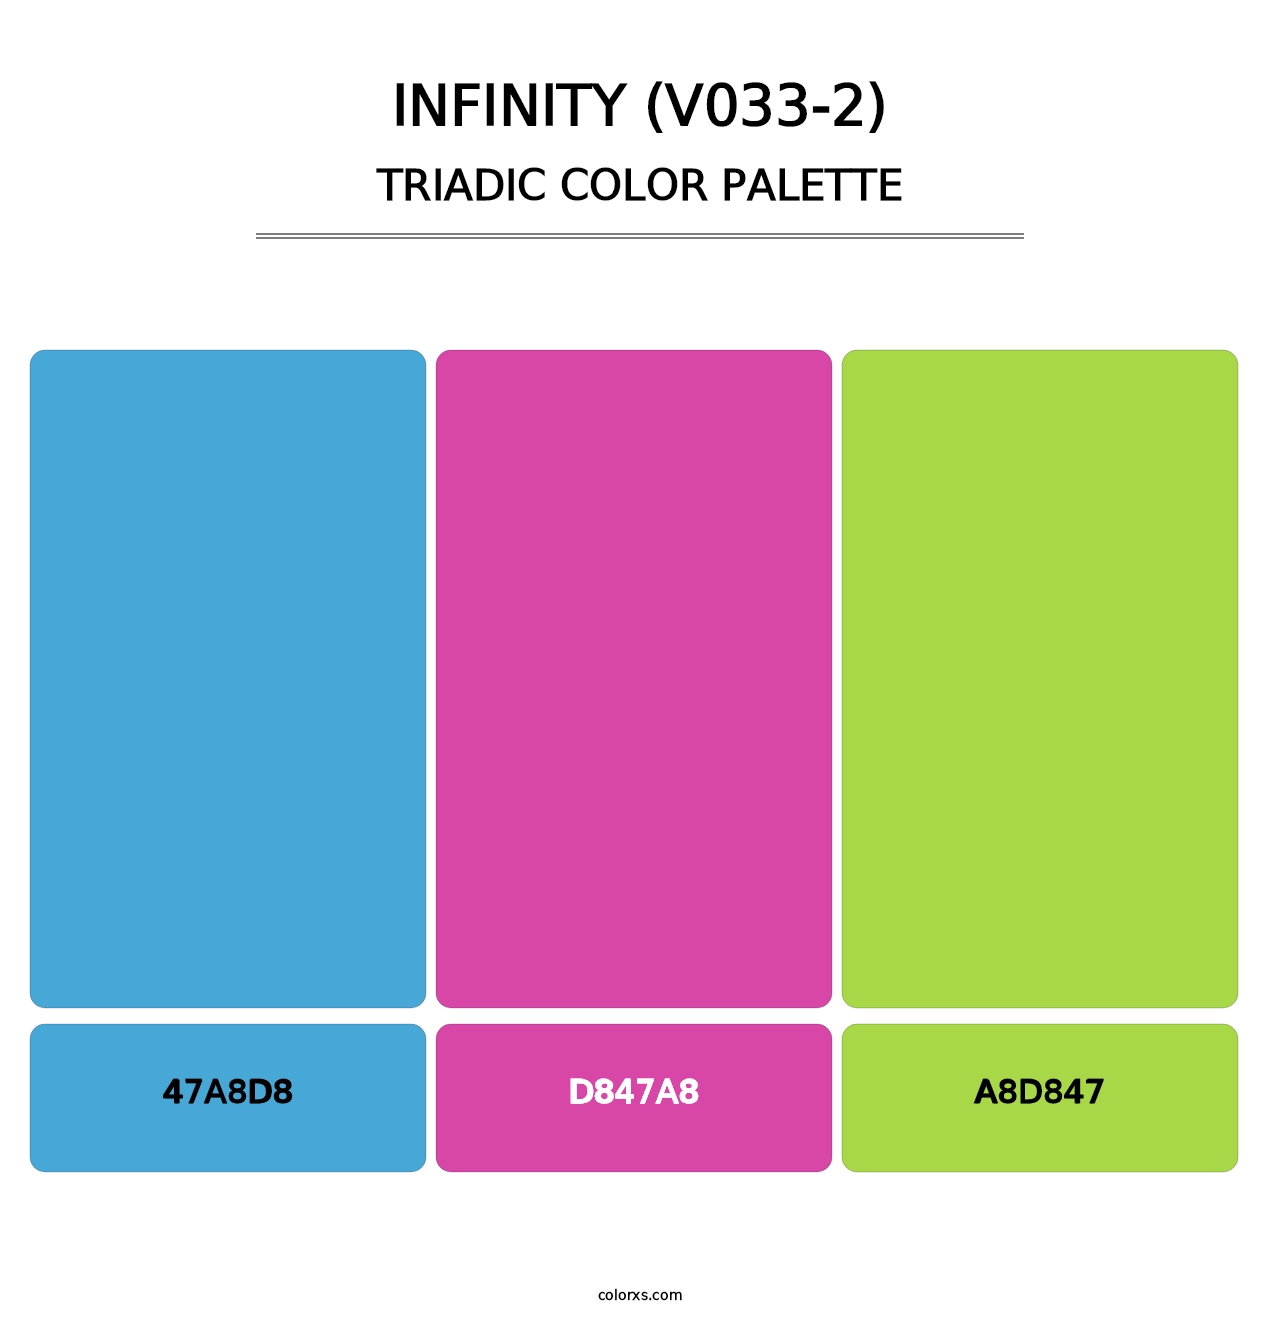 Infinity (V033-2) - Triadic Color Palette